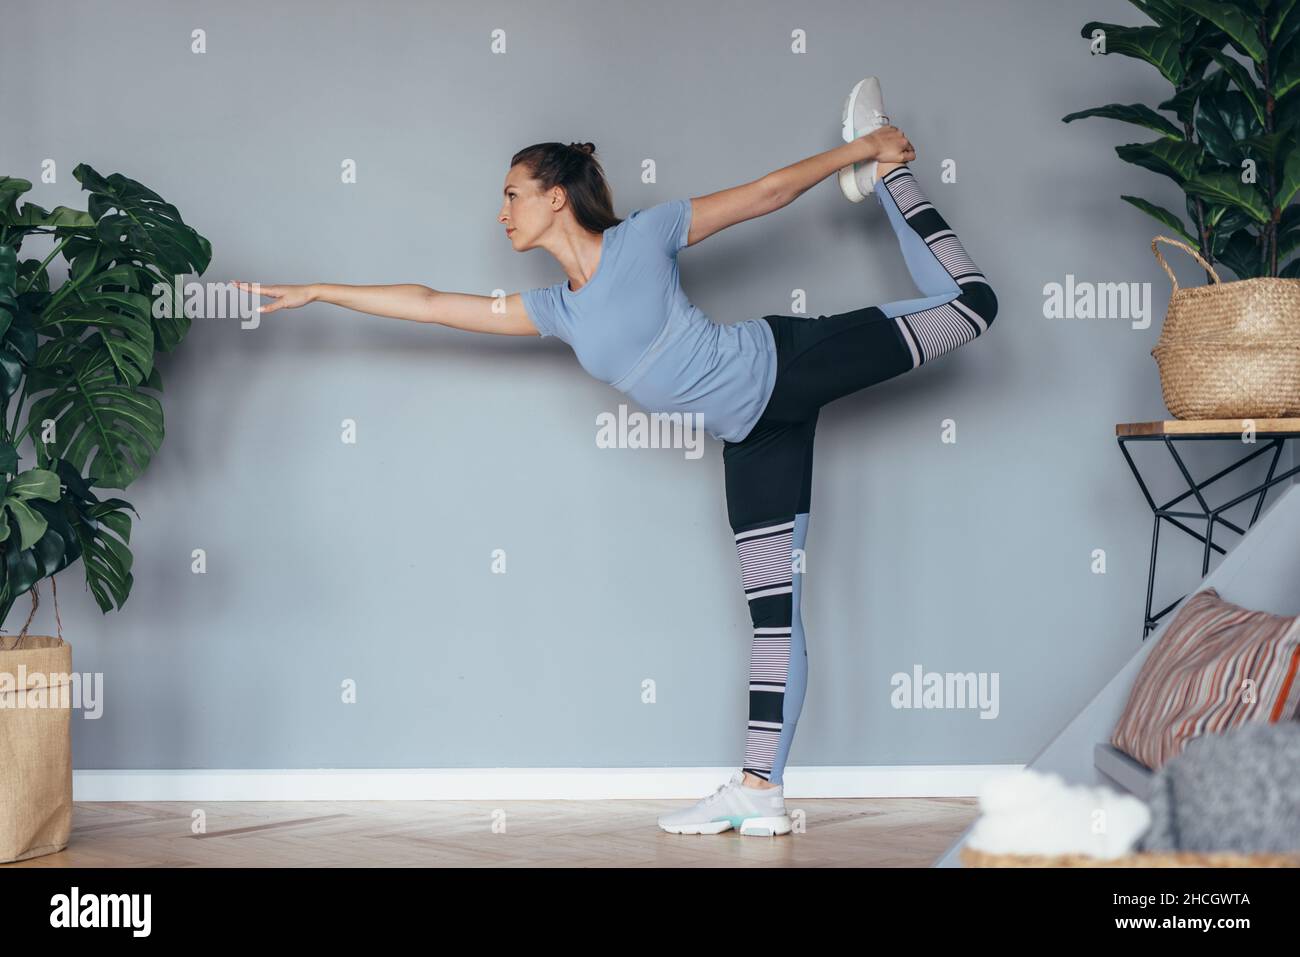 Lower Body Strength & Flexibility - Kaslo, BC